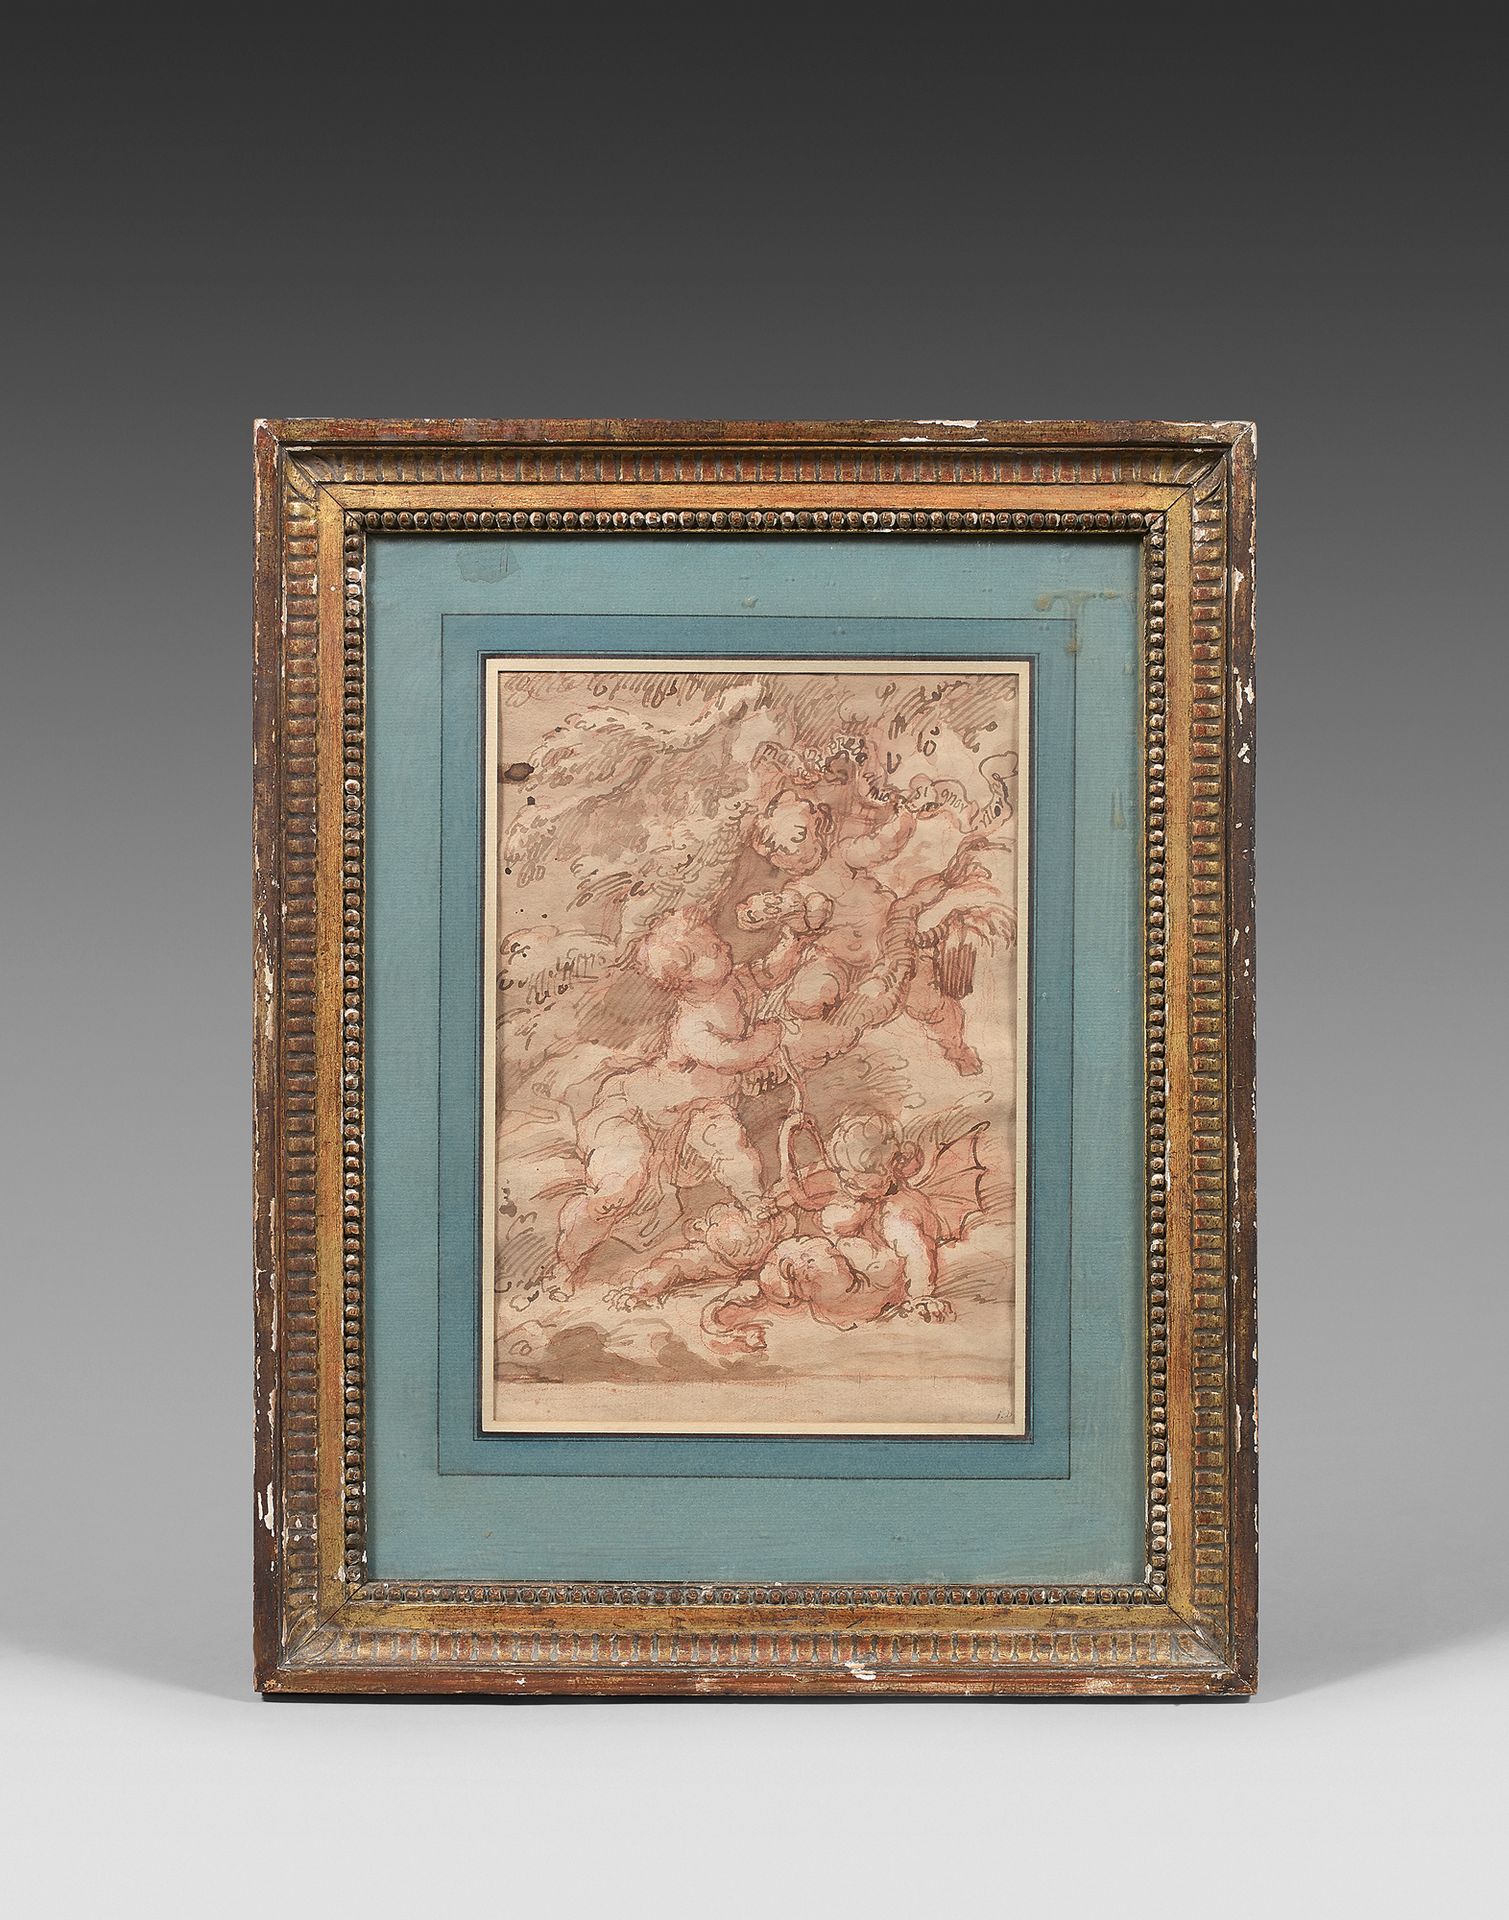 École ITALIENNE du XVIIIe siècle 普蒂
棕色水洗和红色粉笔。
27.5 x 19 cm